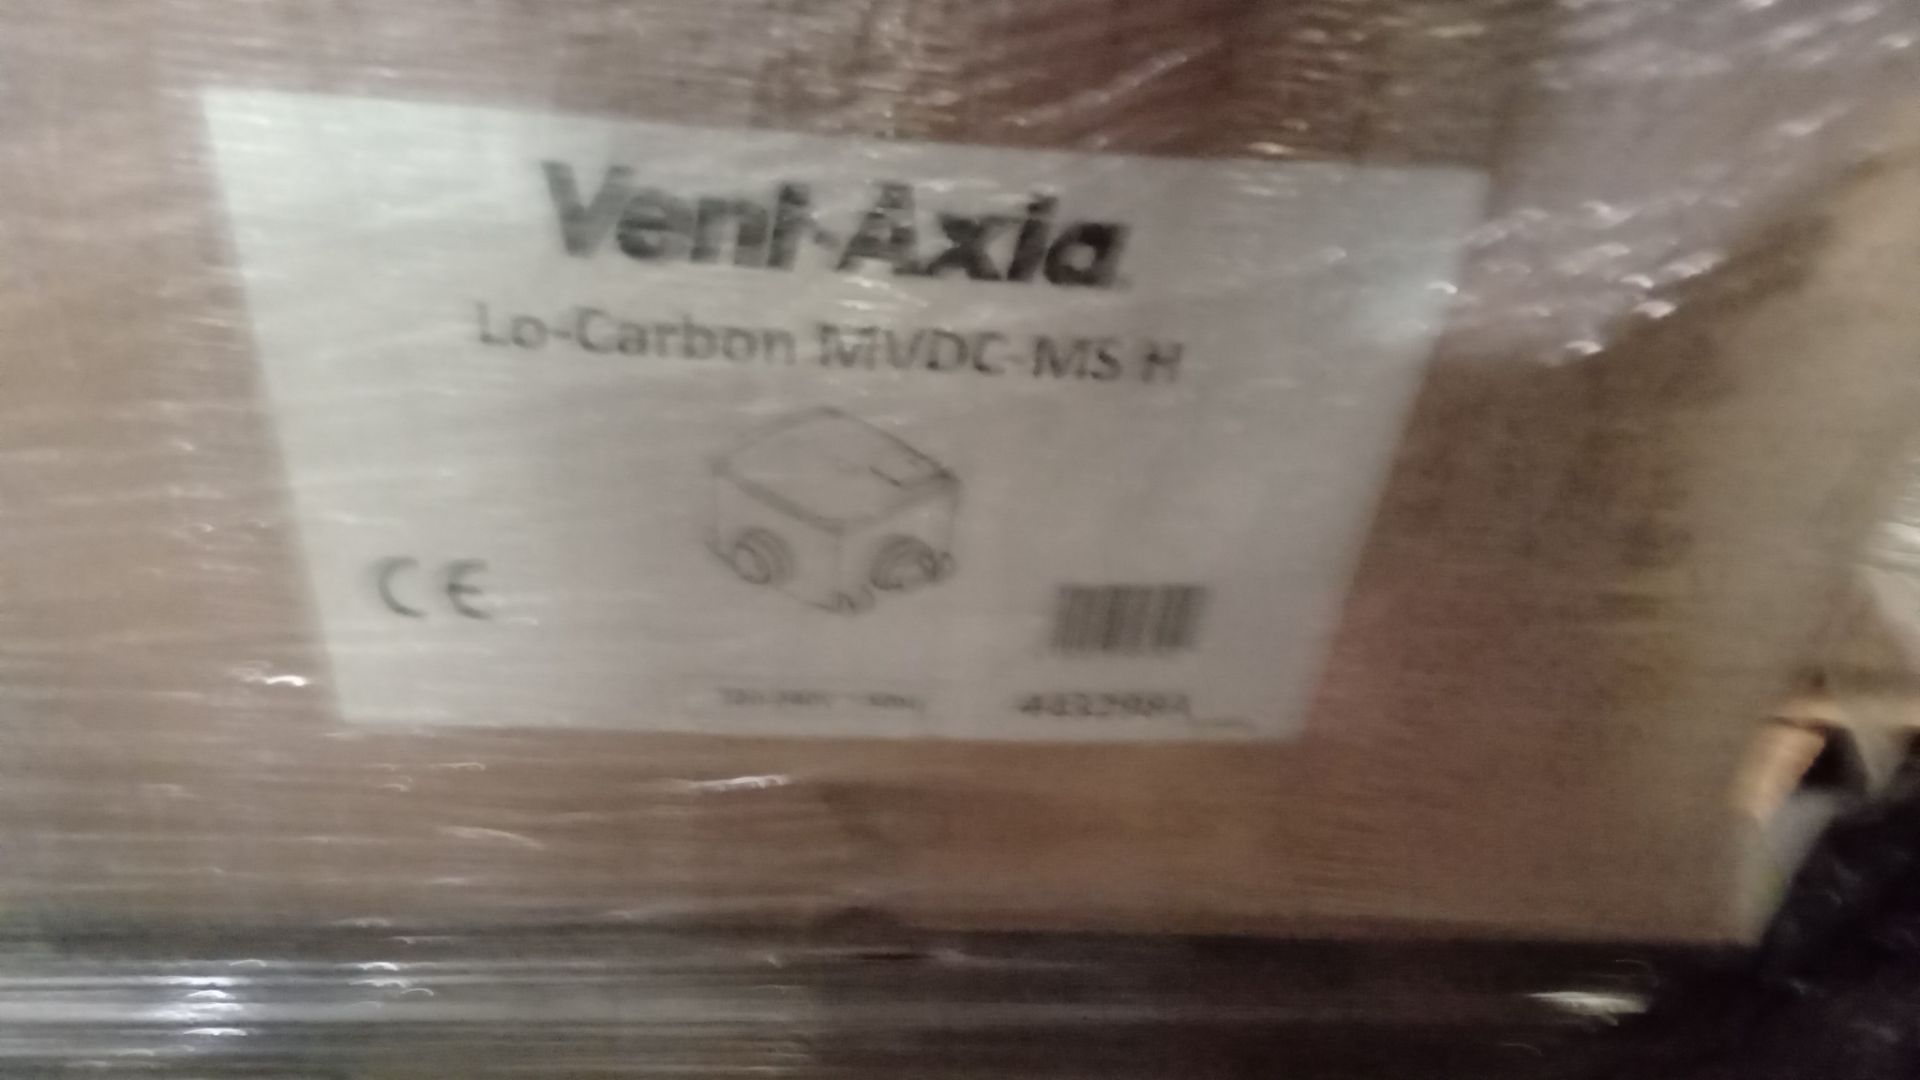 1: Pallet of 24 Vent Axia Lo-Carbon Multivent MVDC-MSH (Black Unit) CMEV - Image 2 of 2